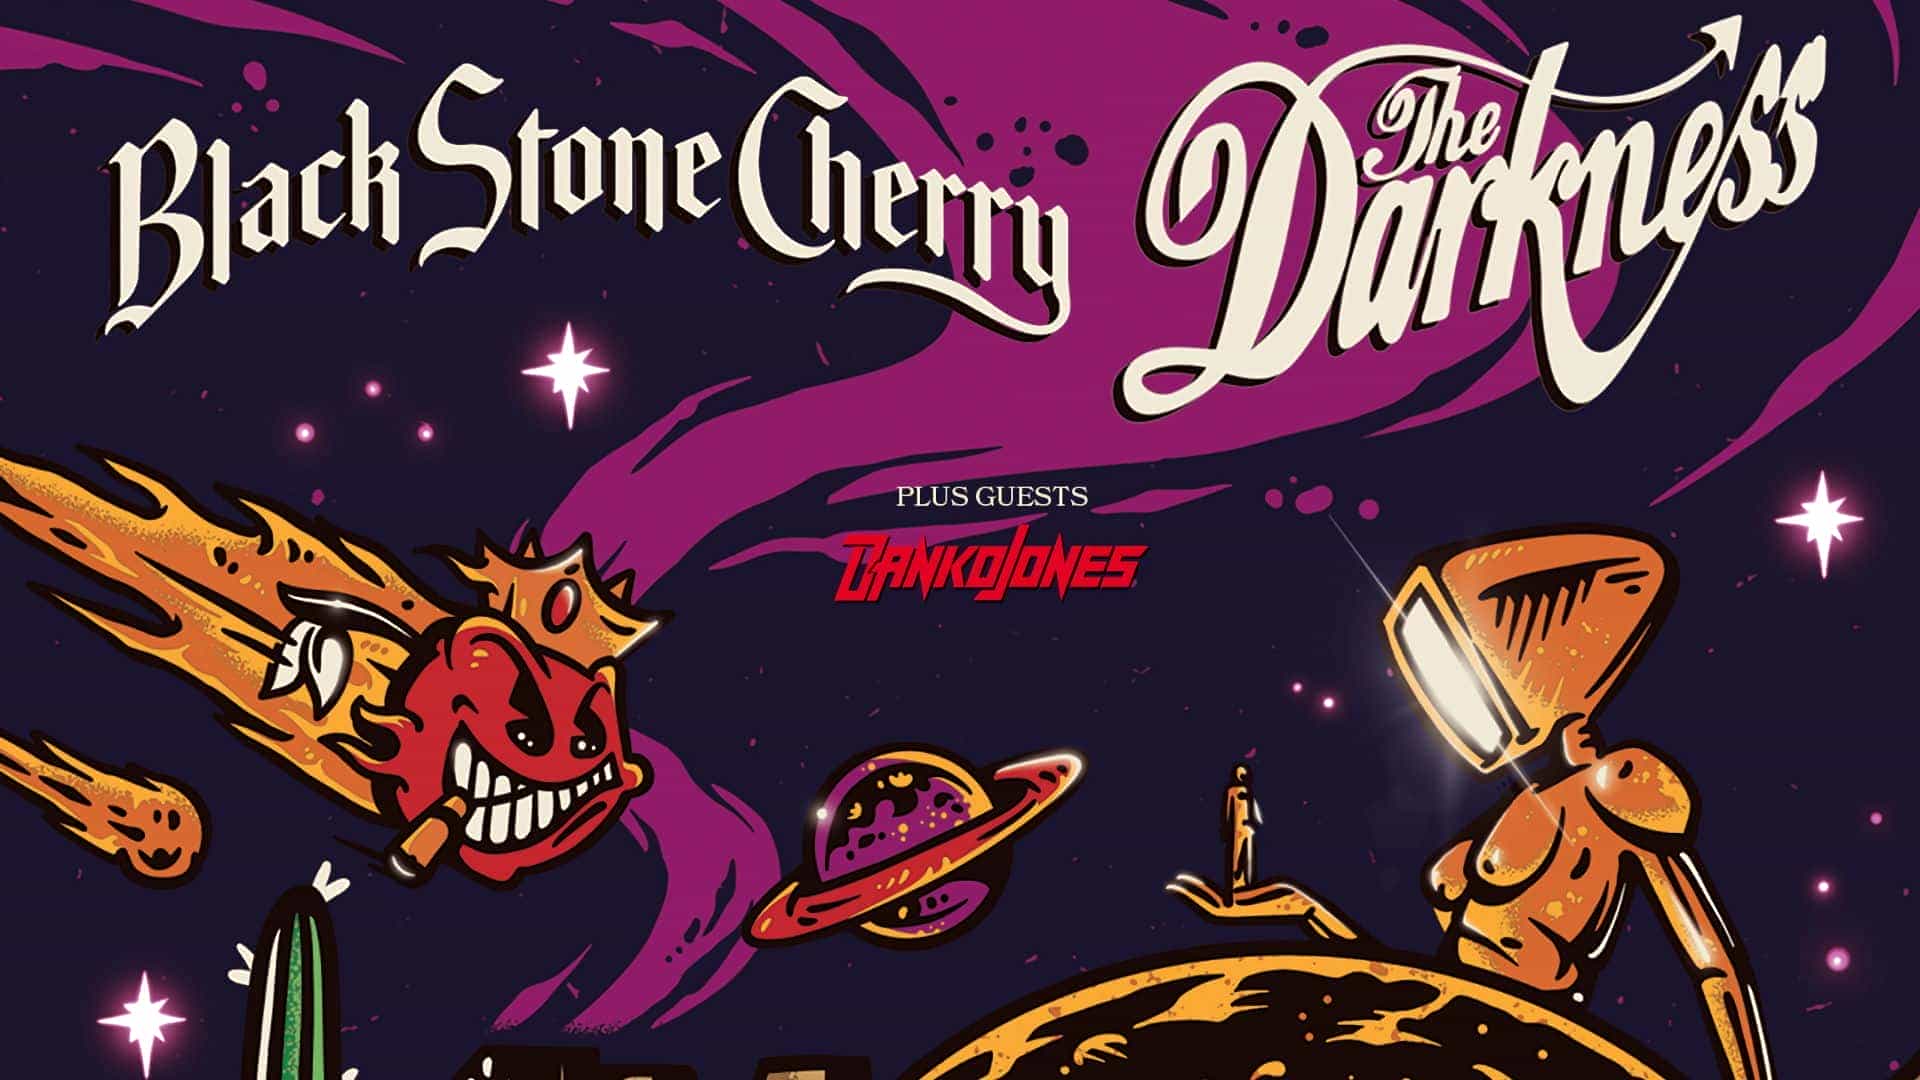 Black Stone Cherry + The Darkness